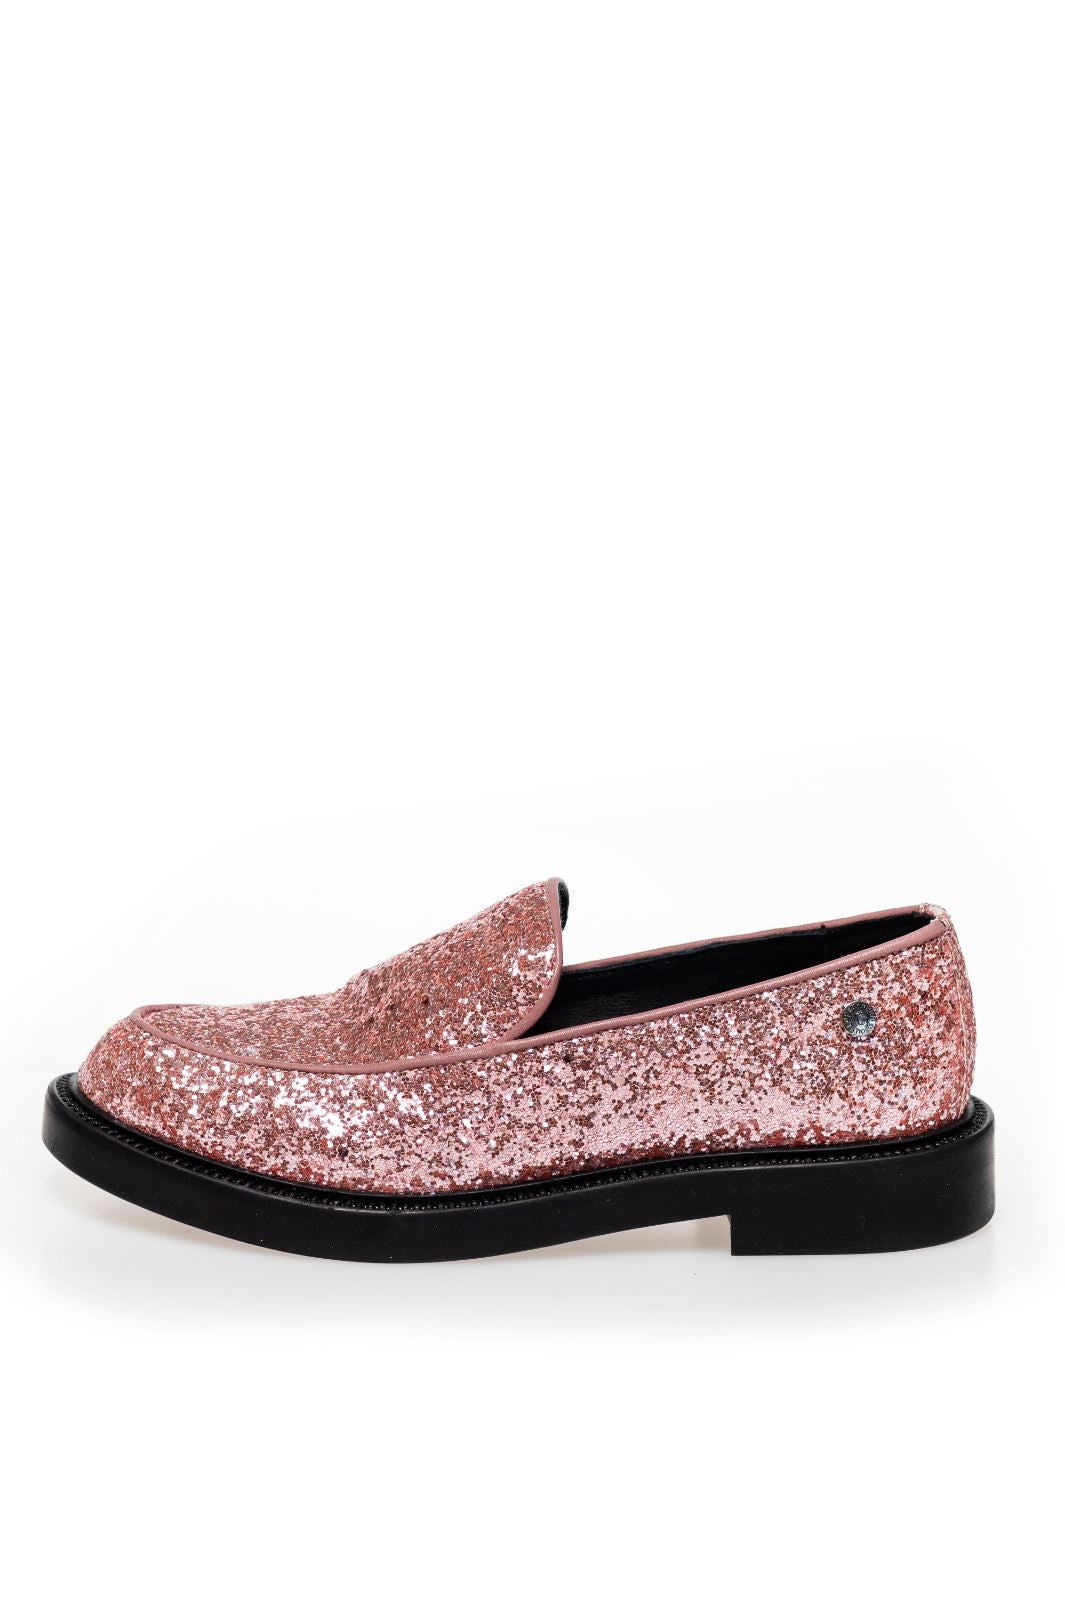 Forudbestilling - Copenhagen Shoes - Cphs Loafer - 2306 Rosa Glitter Loafers 